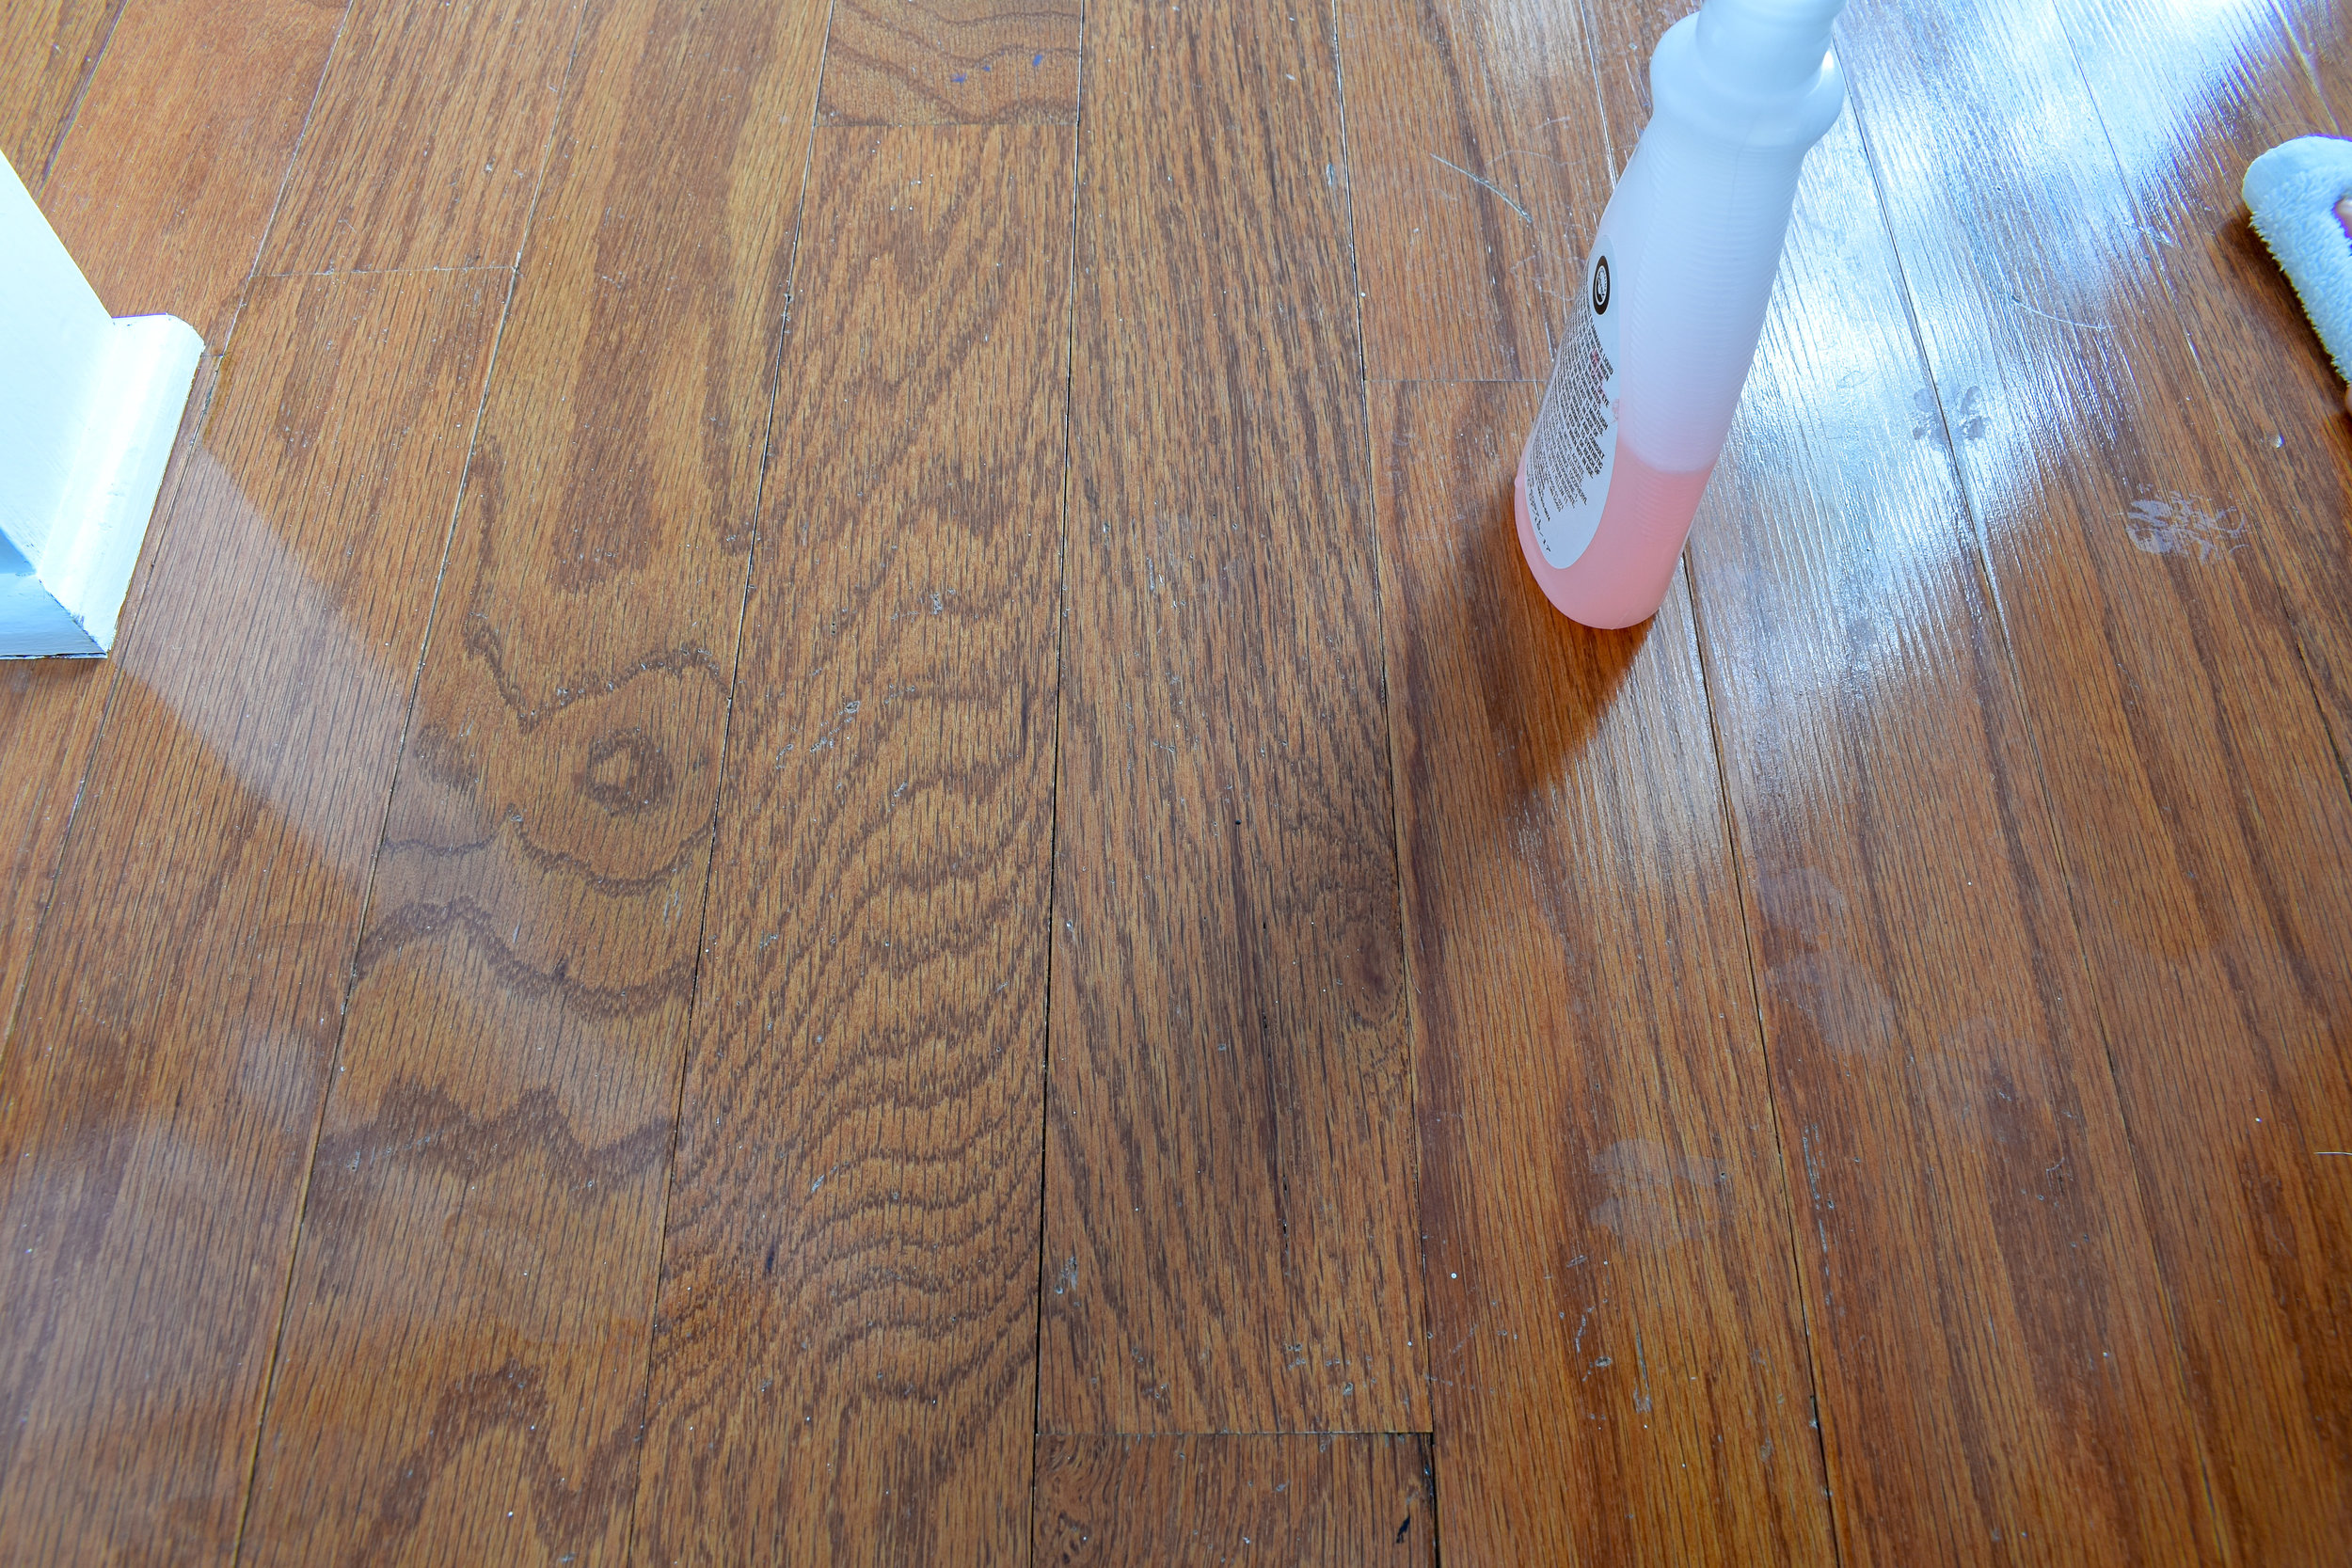 How To Make Old Hardwood Floors Shine, Should Hardwood Floors Be Polished